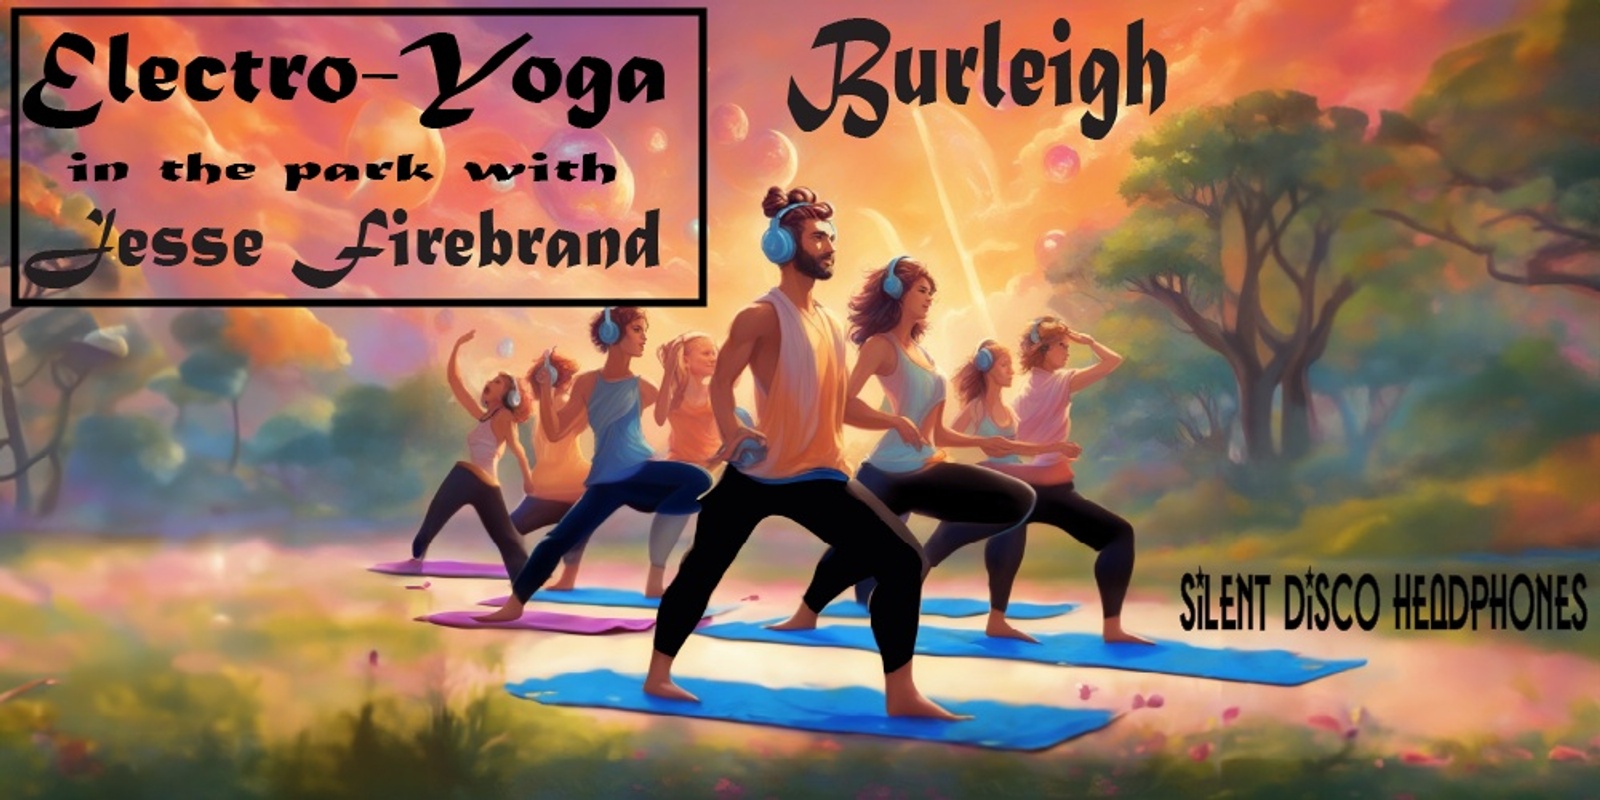 Banner image for Electro Yoga - Burleigh